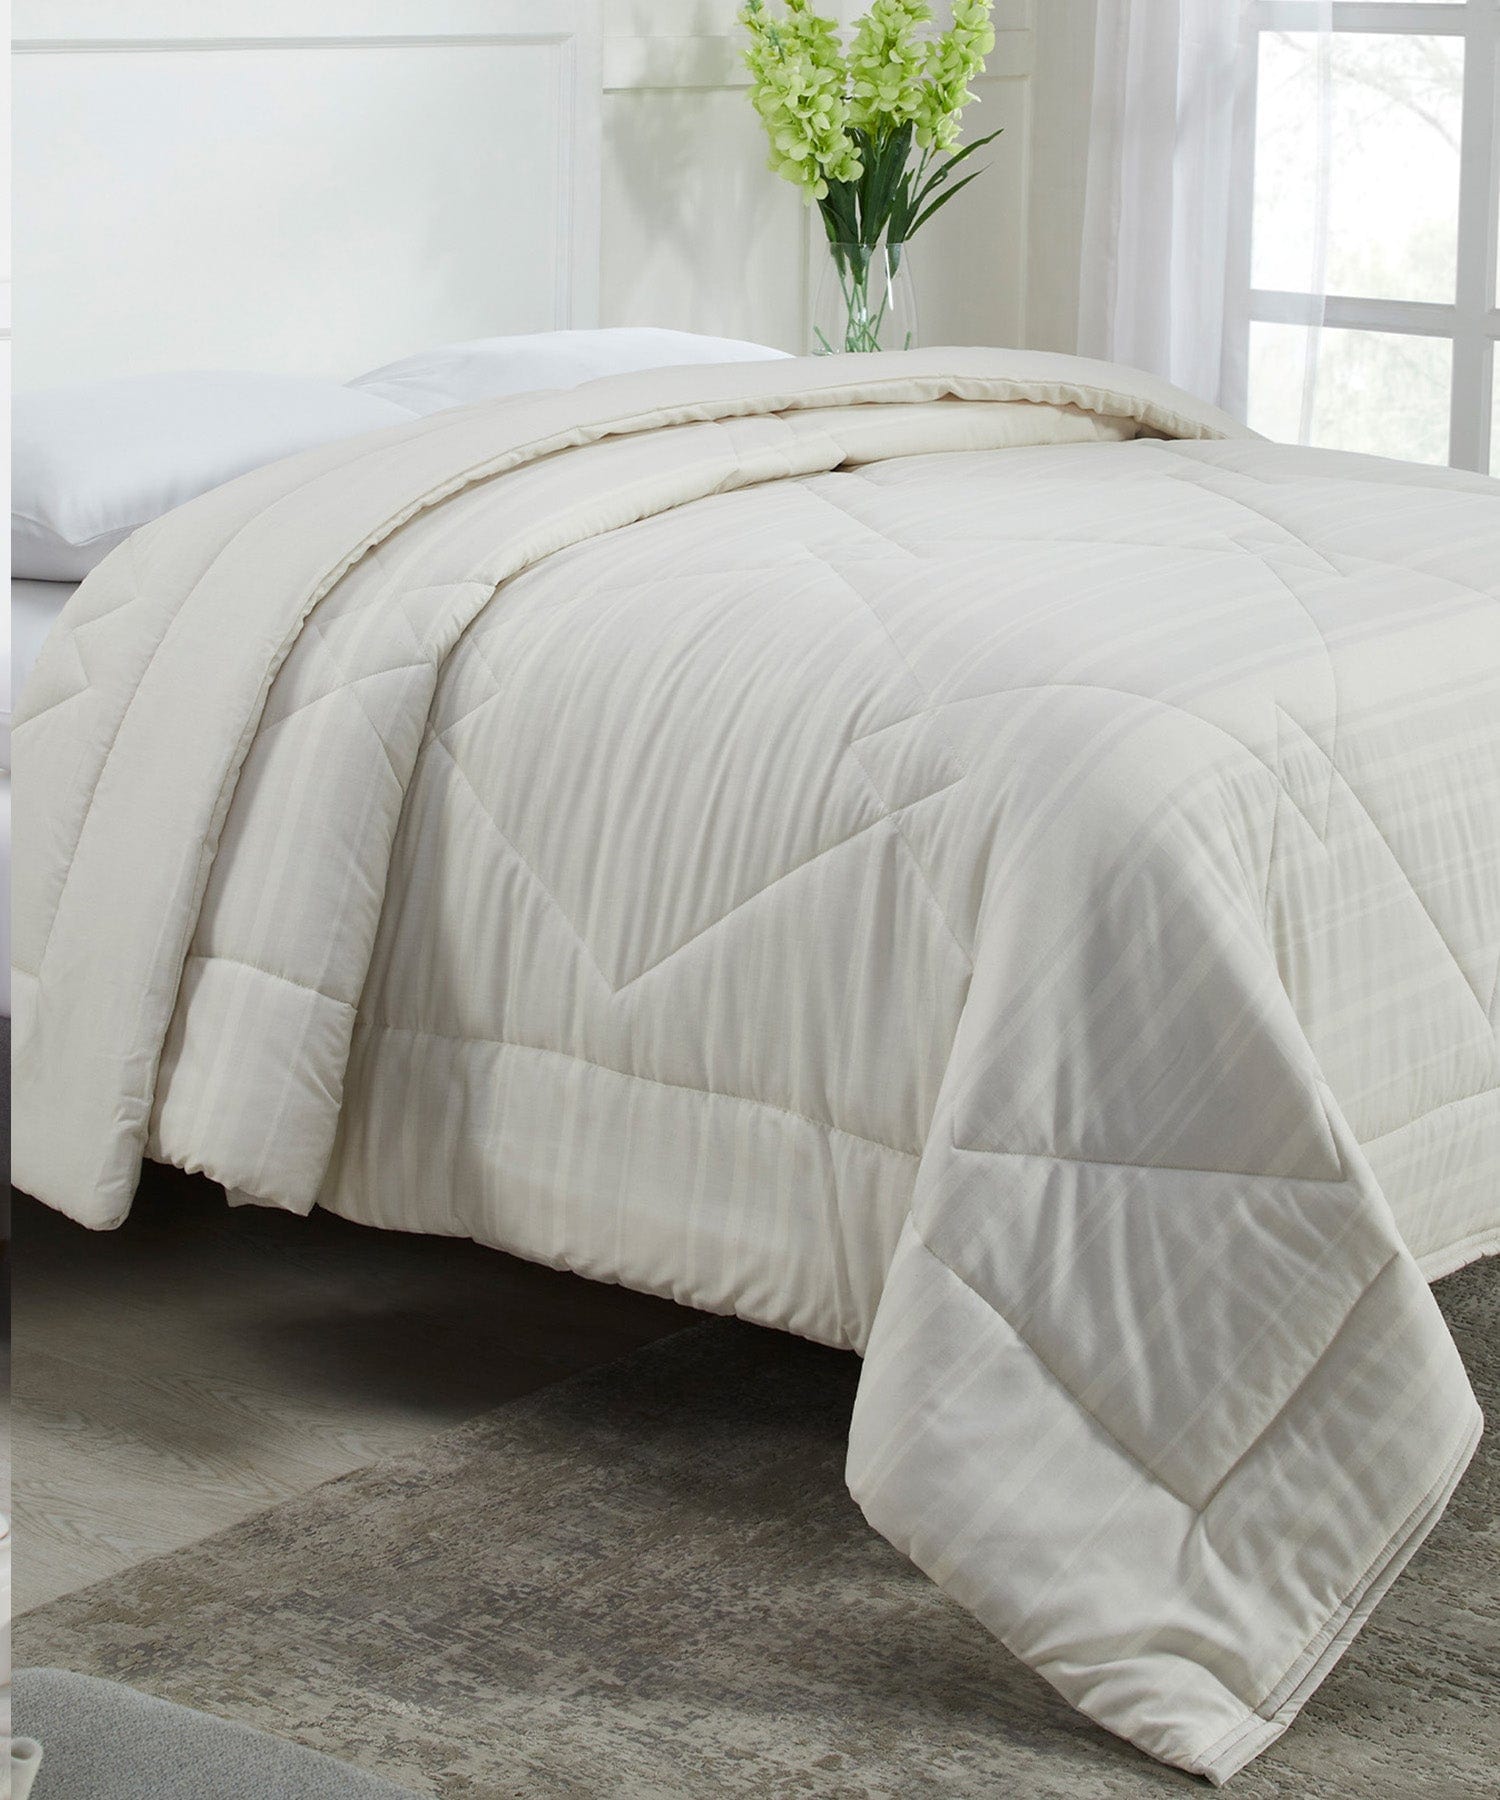 King Size Comforter ₹2559/-